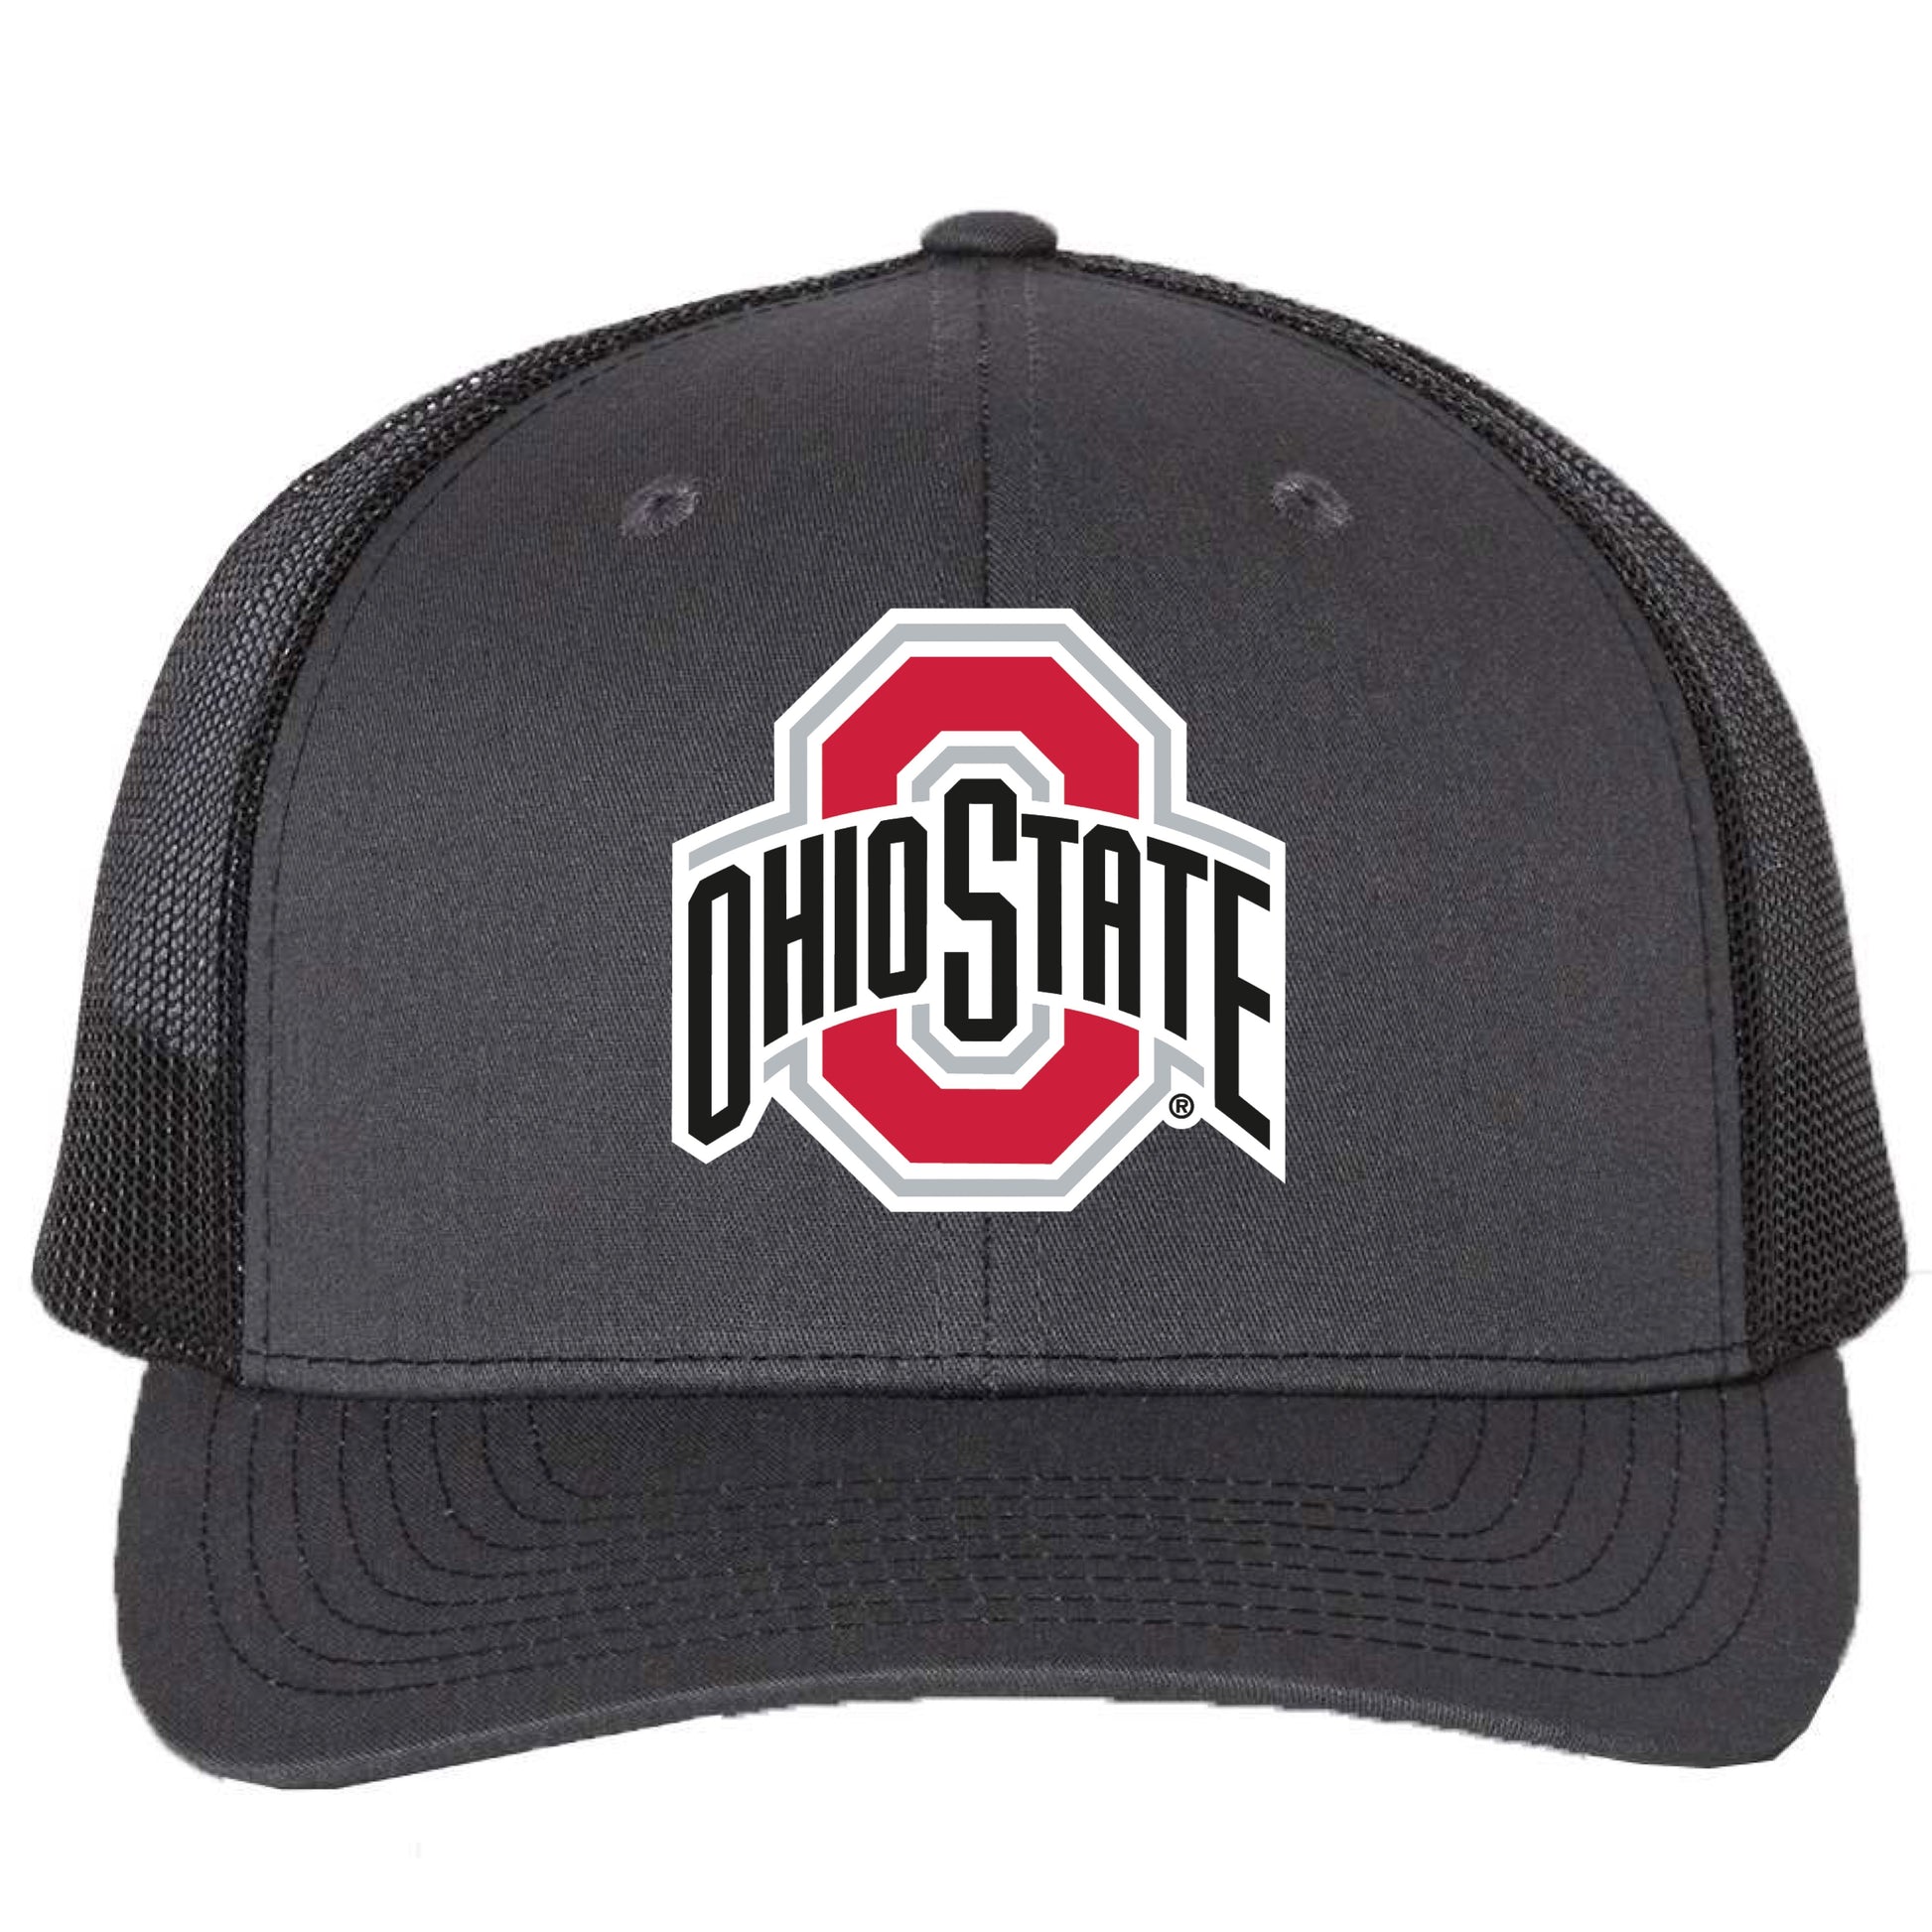 Ohio State Buckeyes 3D Snapback Trucker Hat- Charcoal/ Black - Ten Gallon Hat Co.